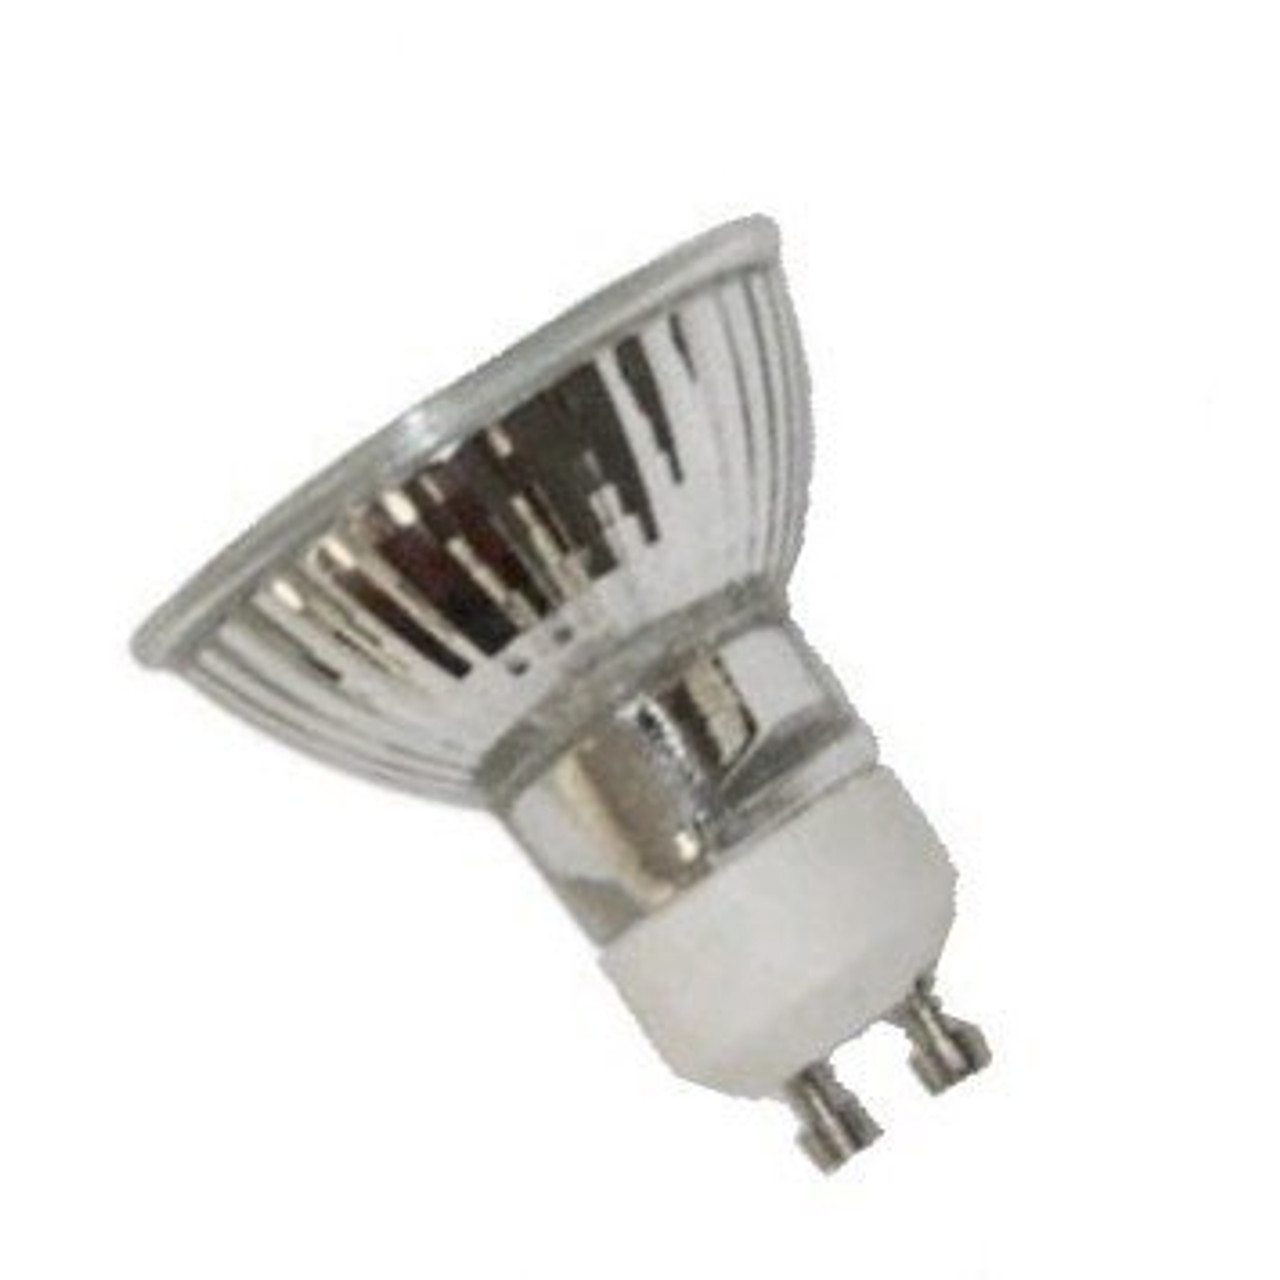 GU10 Bulb, 6 Pack Halogen GU10 120V 50W, Dimmable, MR16 GU10 Light